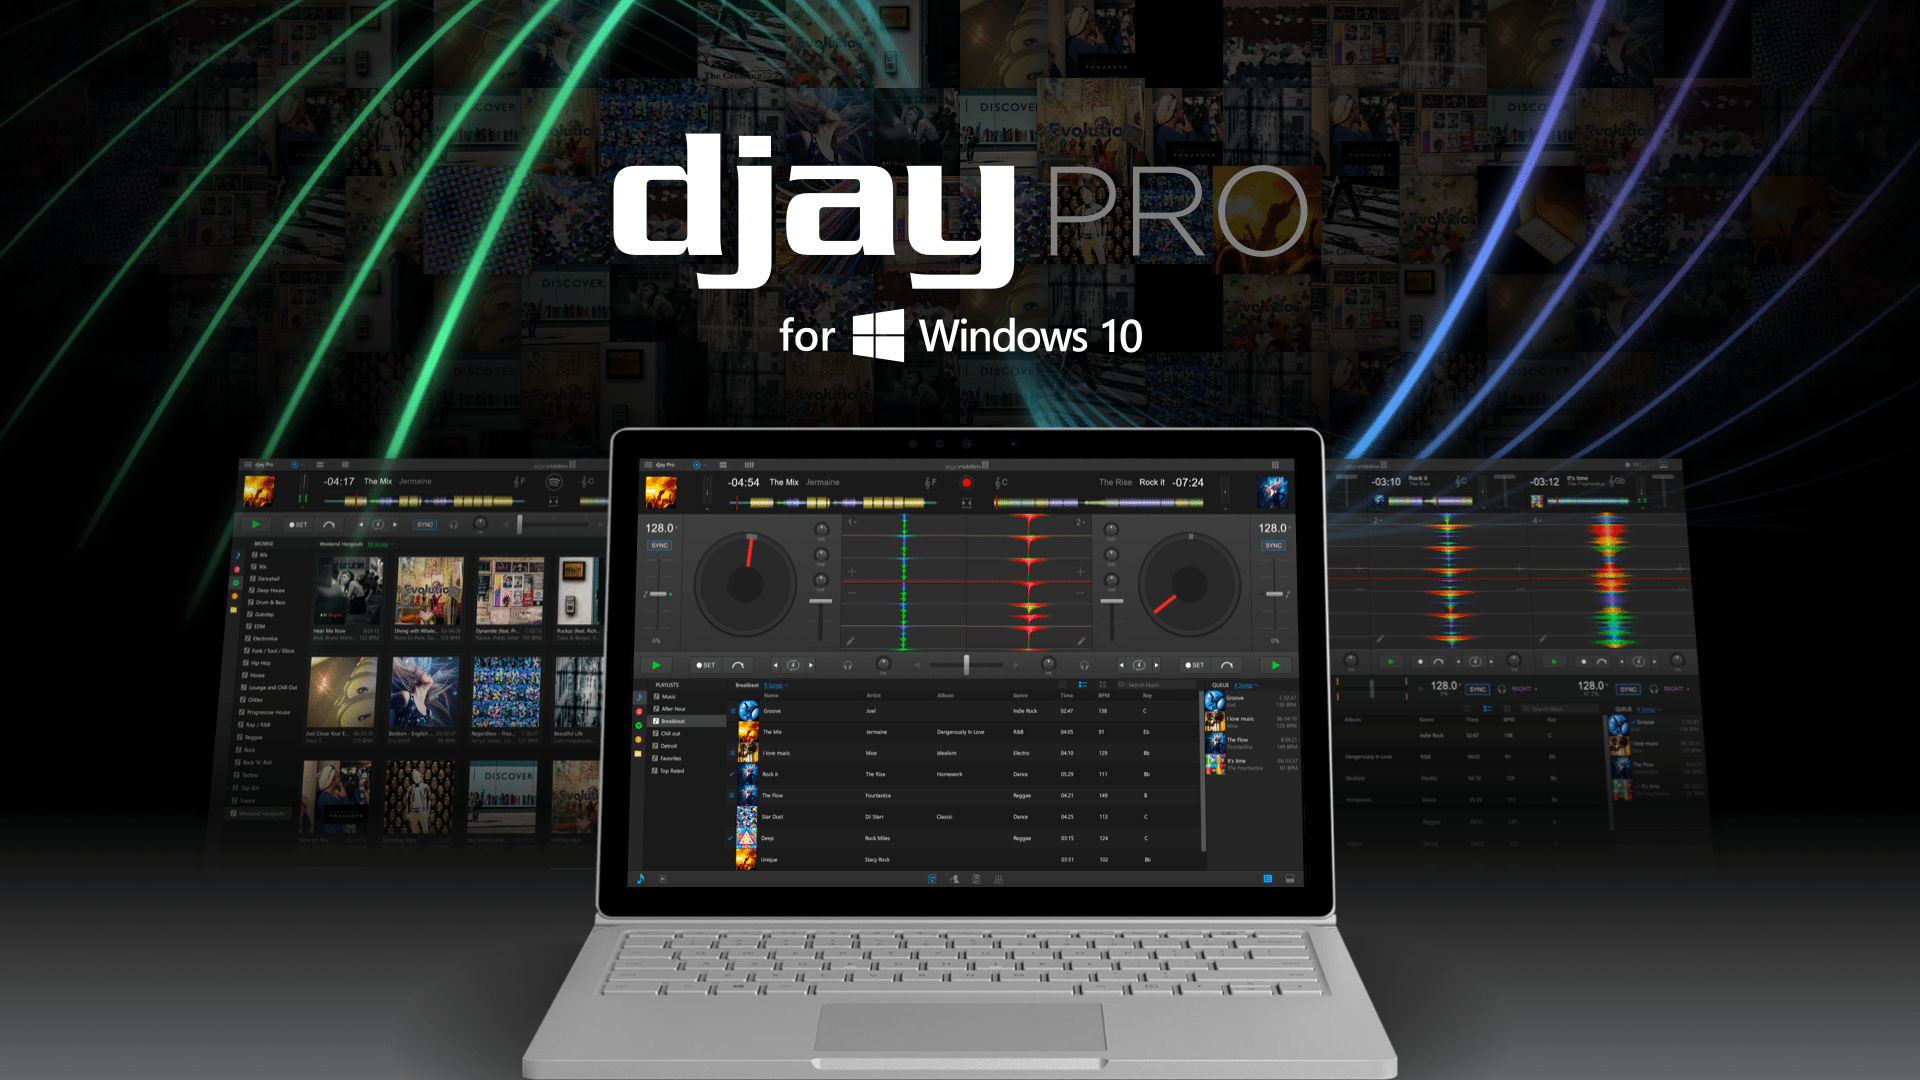 Can you share djay pro 2 windows